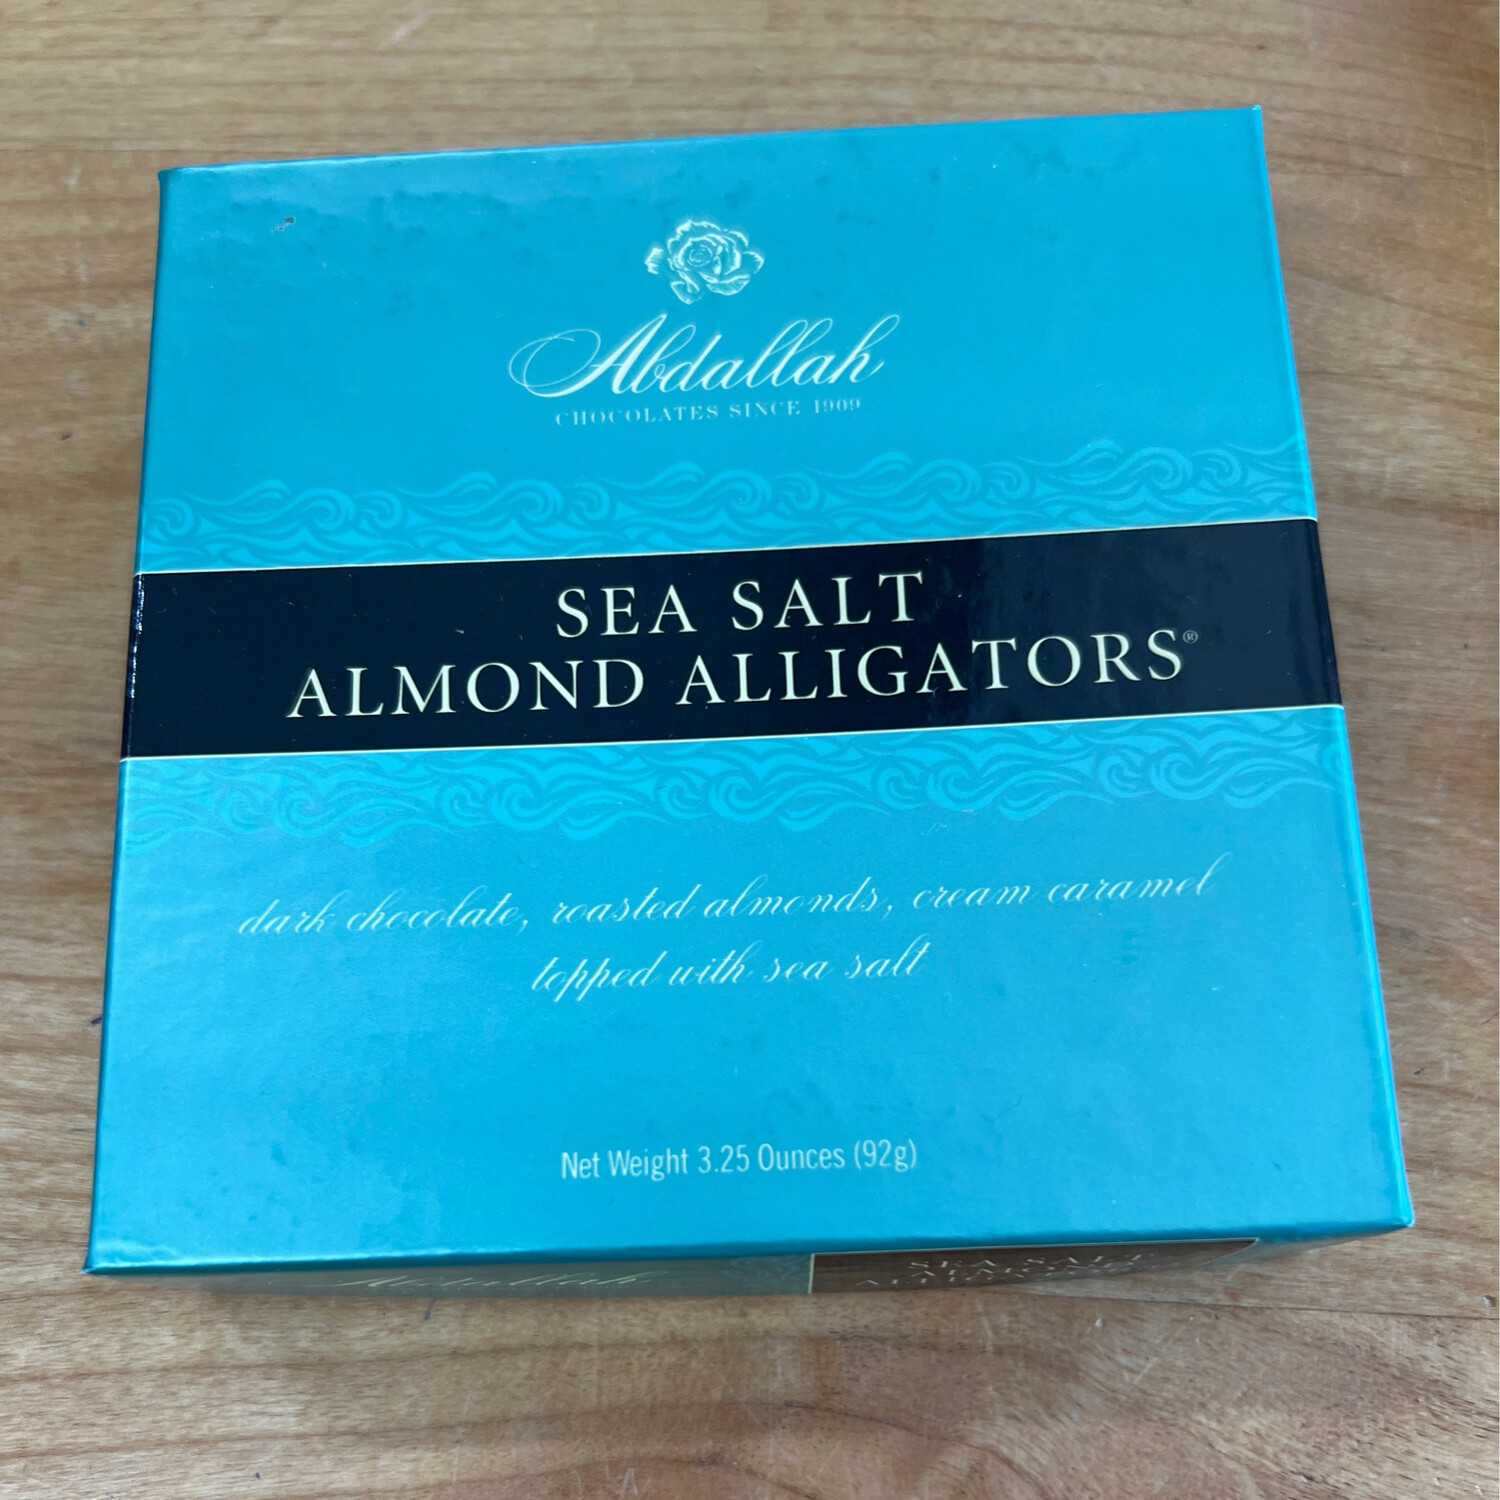 Abdallah 3.25oz Sea Salt Caramel Alligators